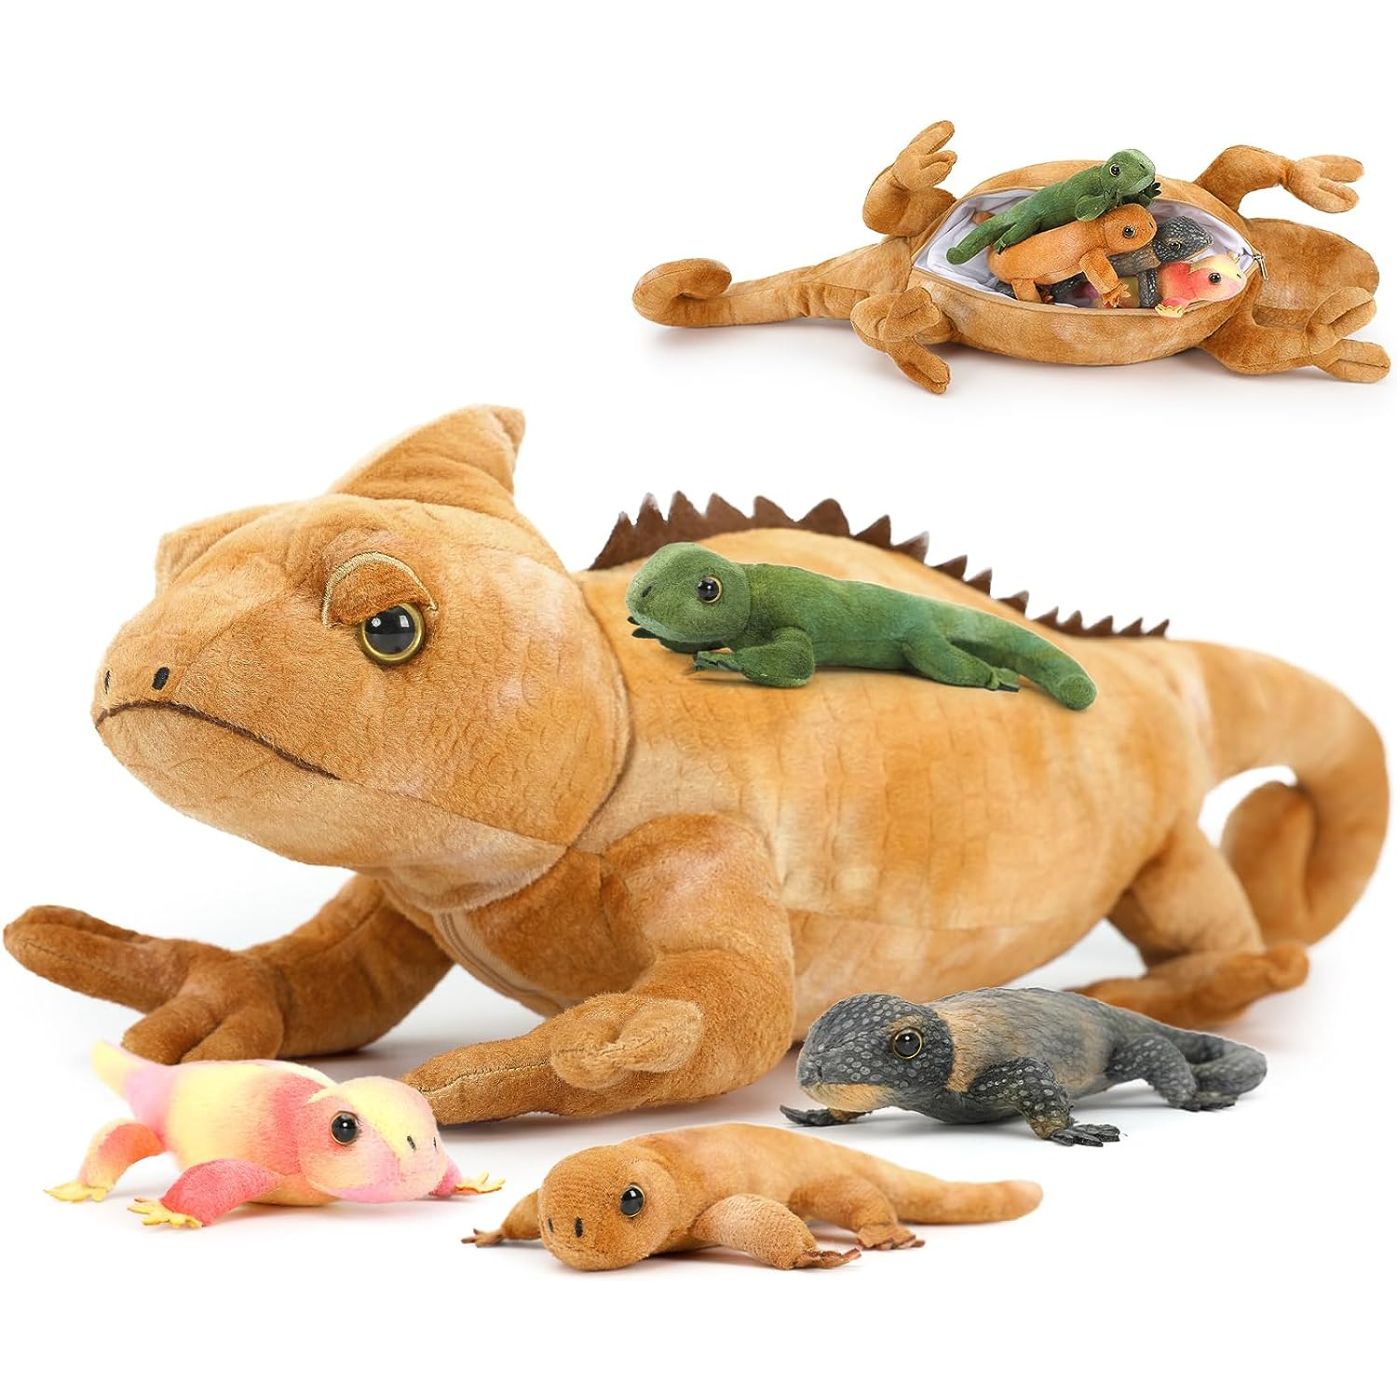 Lizard Stuffed Animal Toy, 26.8 Inches